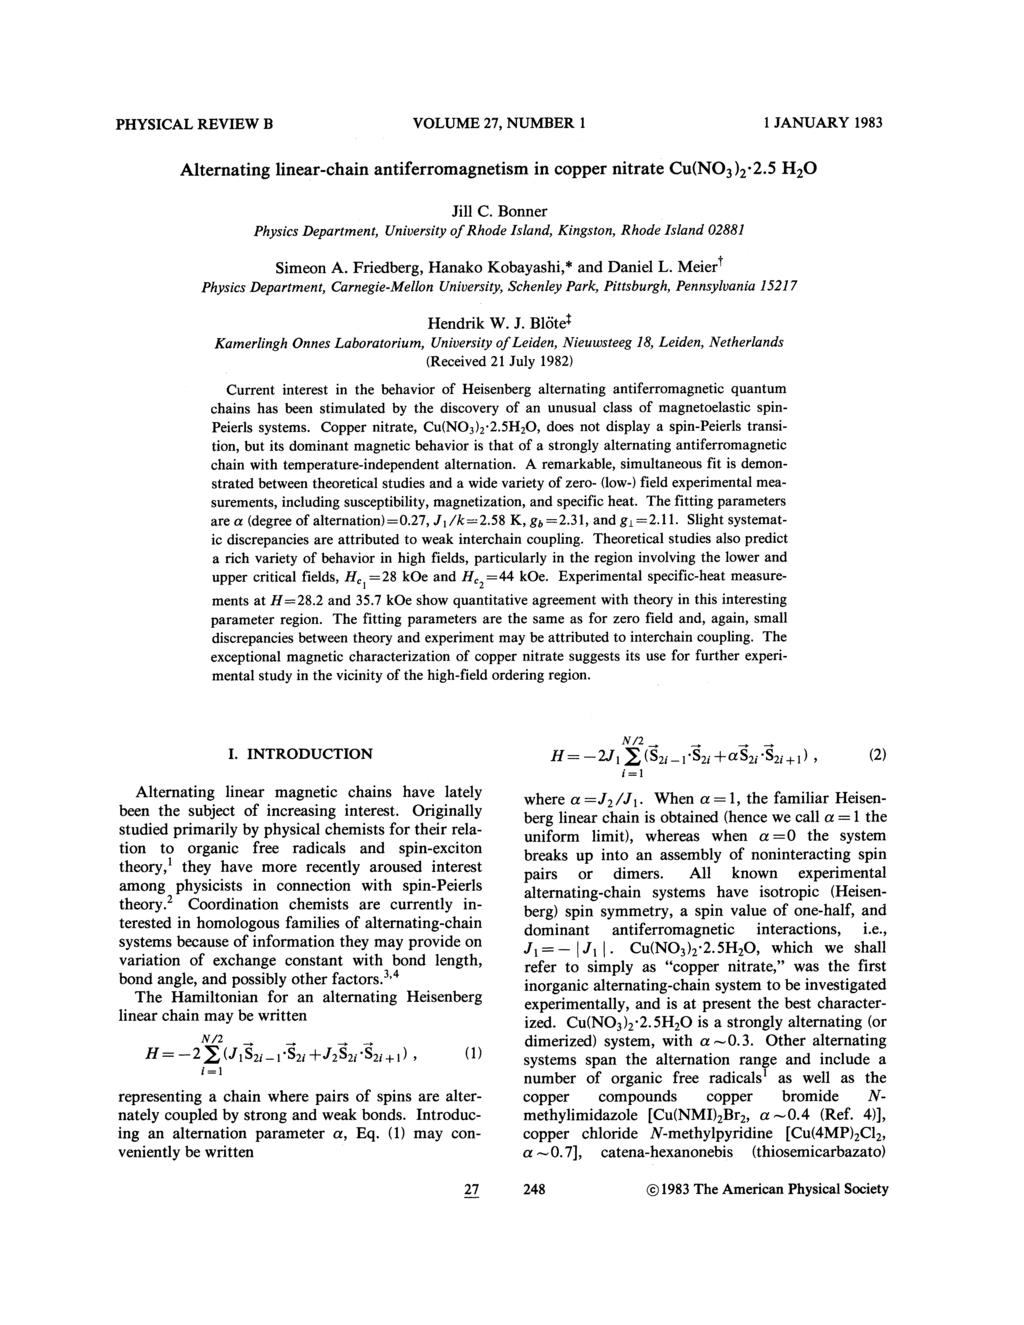 PHYSICAL REVIBW B VOLUME 27, NUMBER 1 1 JANUARY 1983 Alternating linear-chain antiferromagnetism in copper nitrate Cu(N0 3 )2 2.5 H 2 0 Jill C.